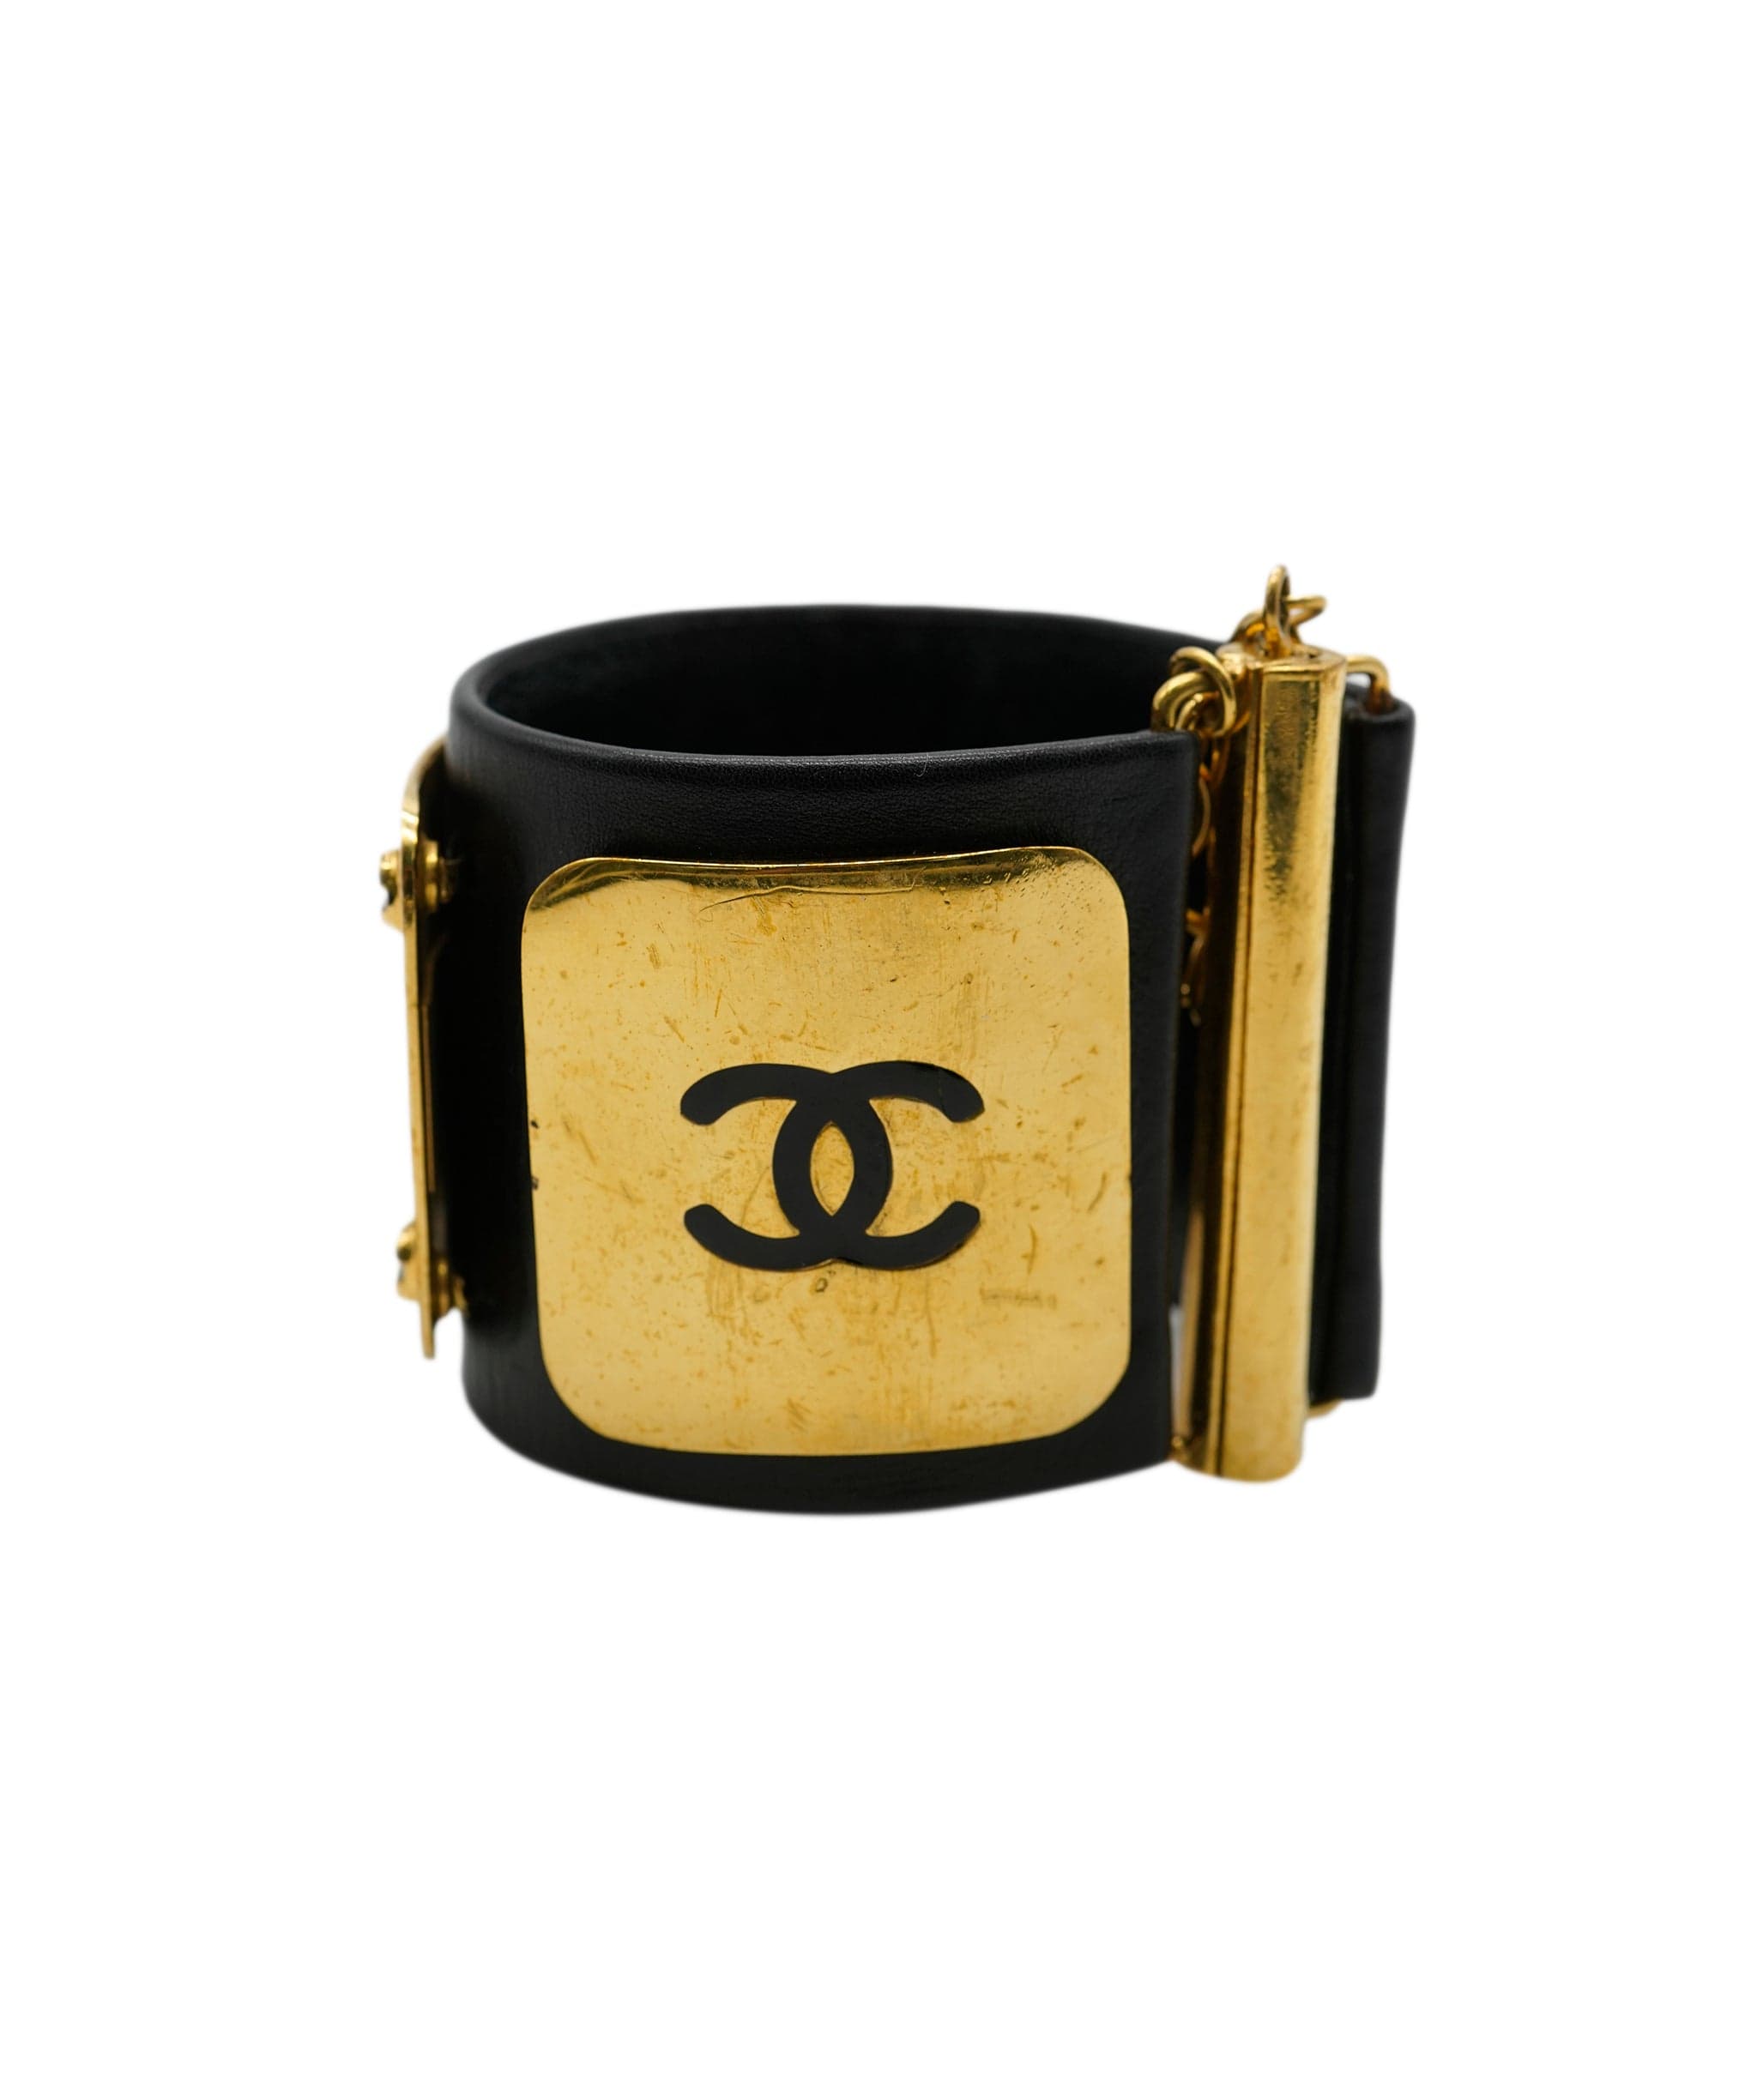 Chanel Chanel CC Wide Leather Cuff ASL4522